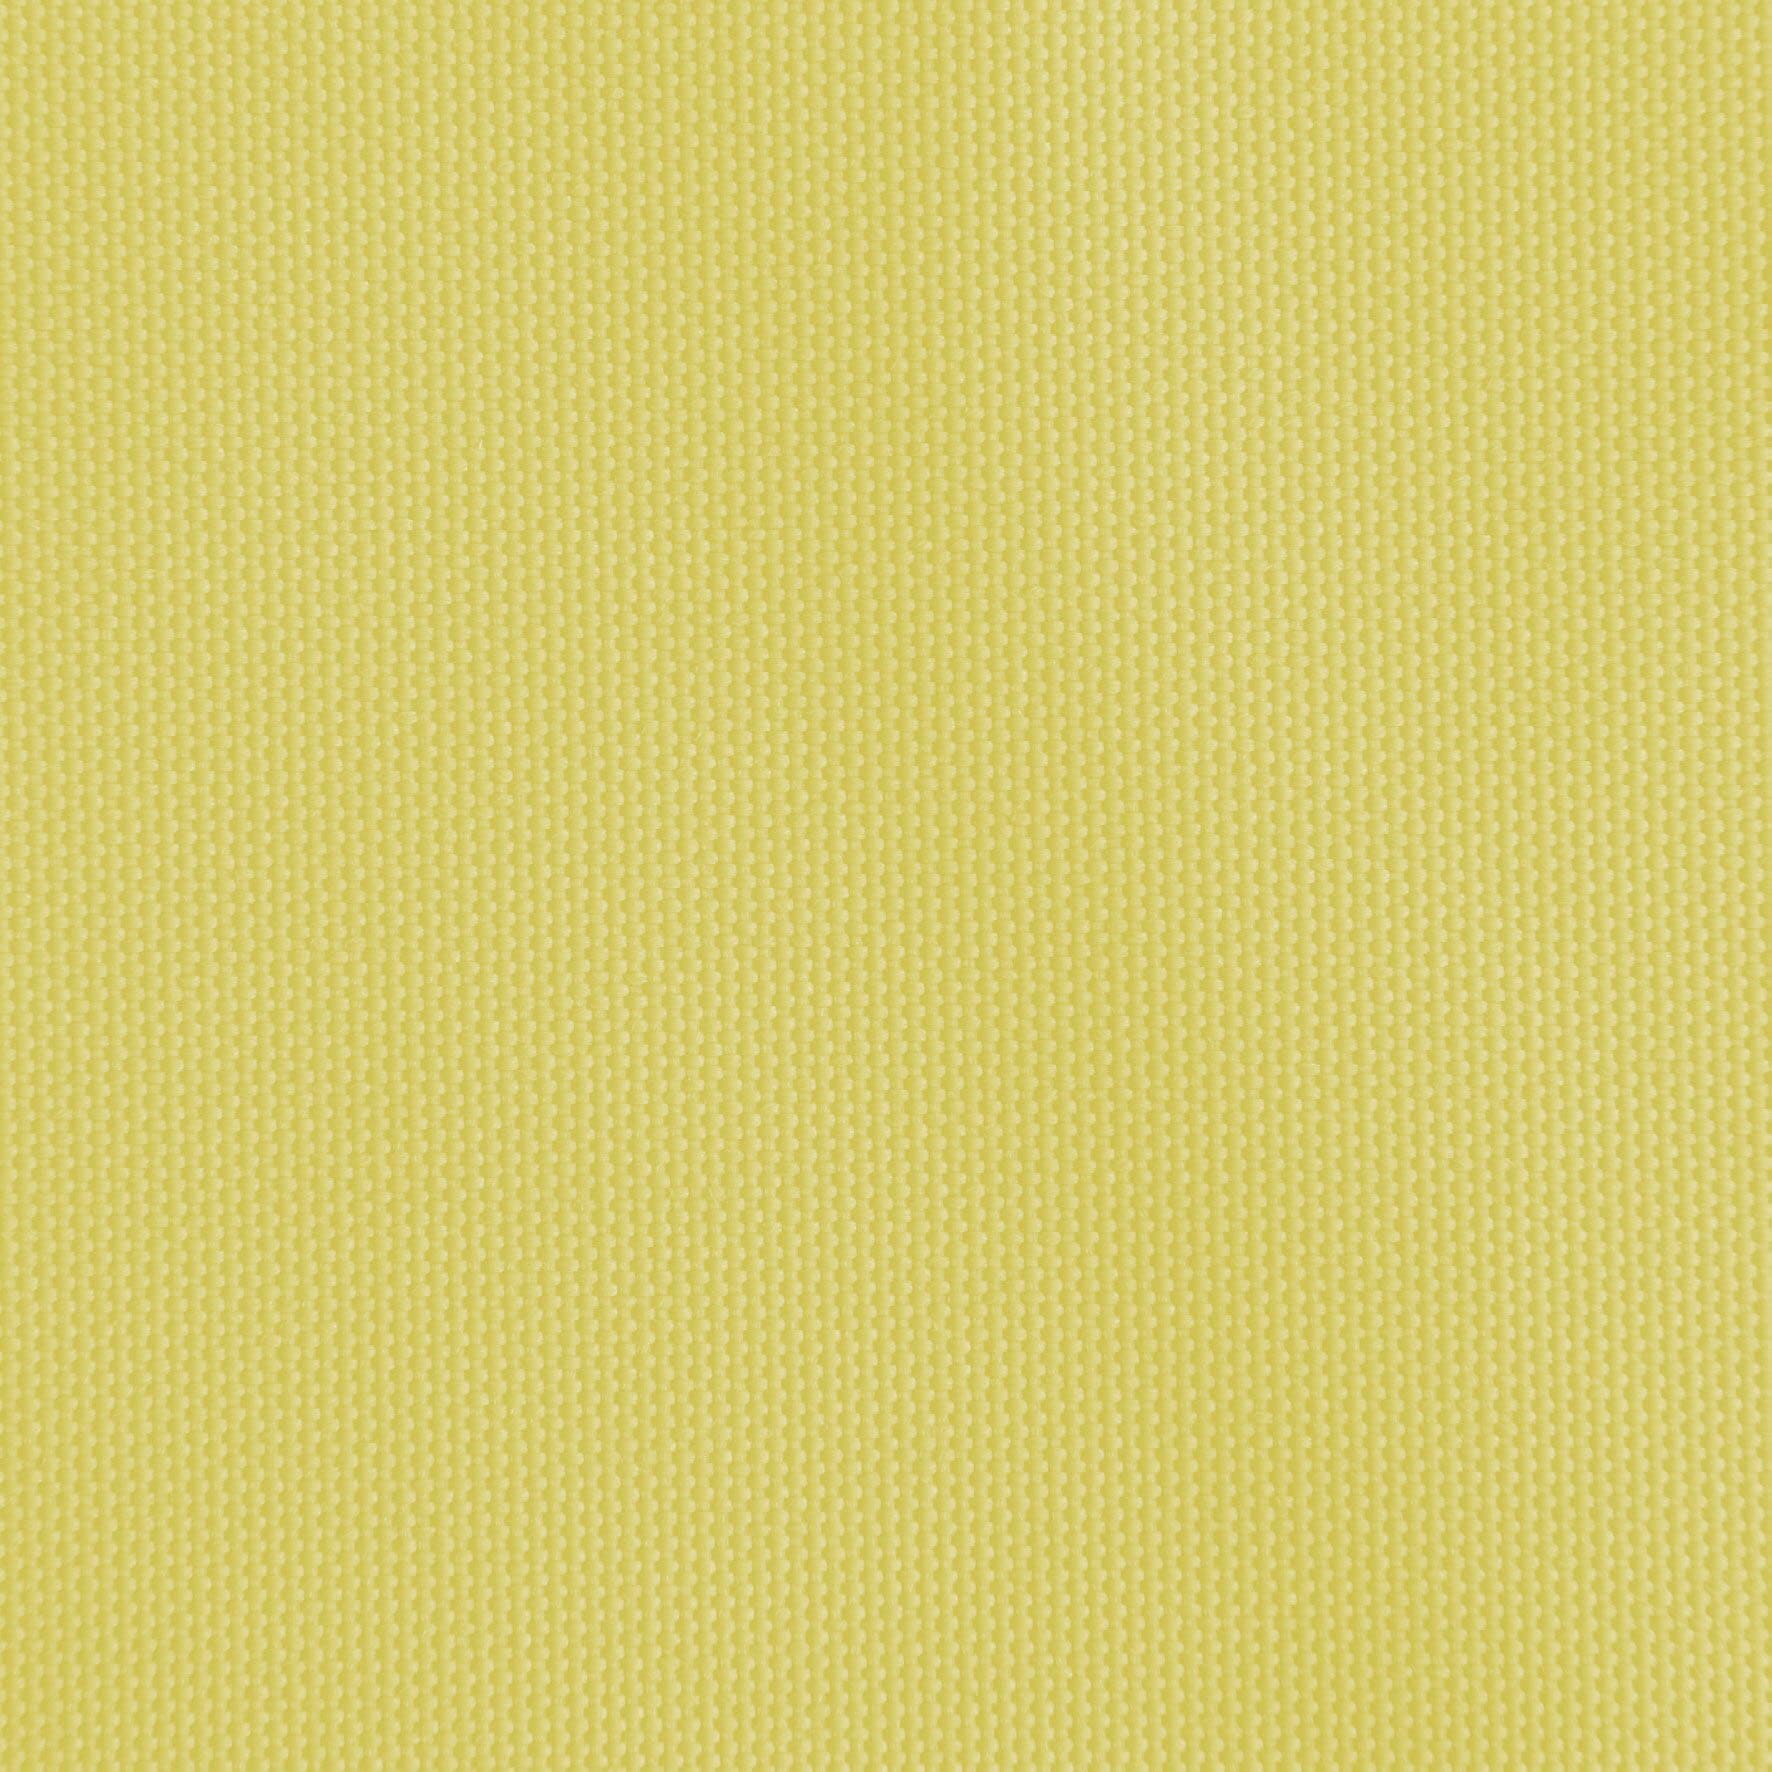 Windhager Sonnensegel »Cannes Rechteck«, 4x5m, gelb